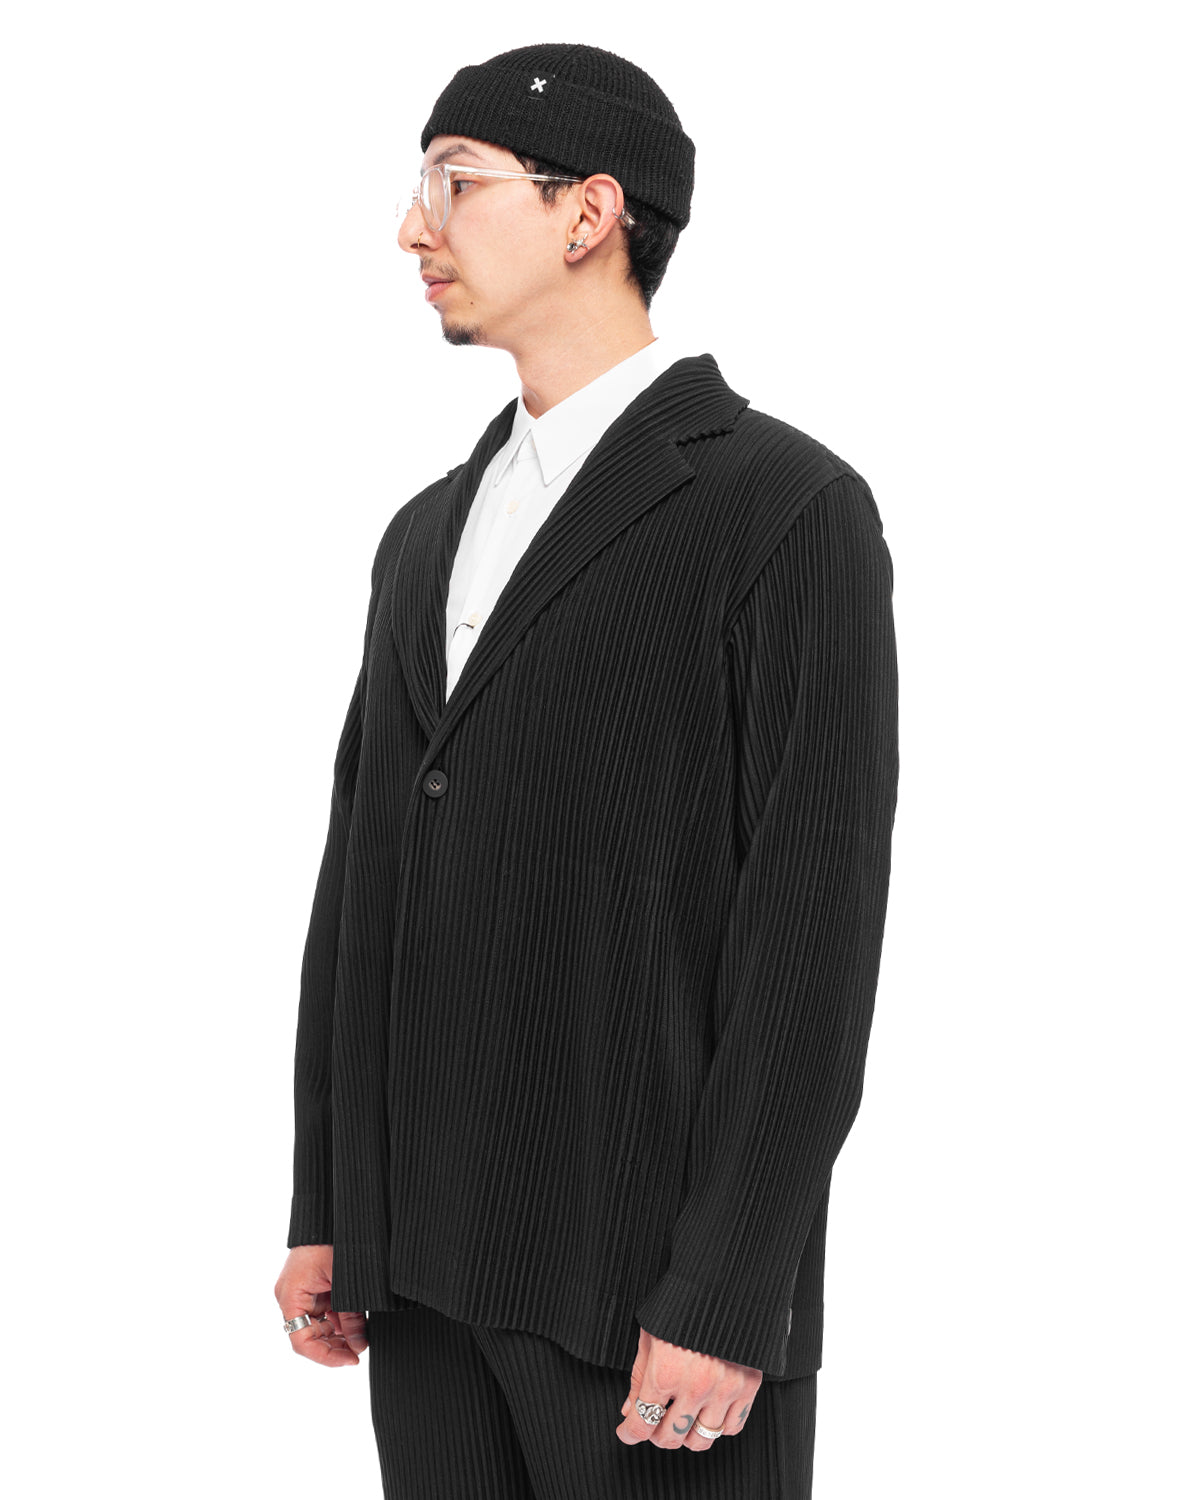 Basics Tailored Jacket SS23 Black (no.15)